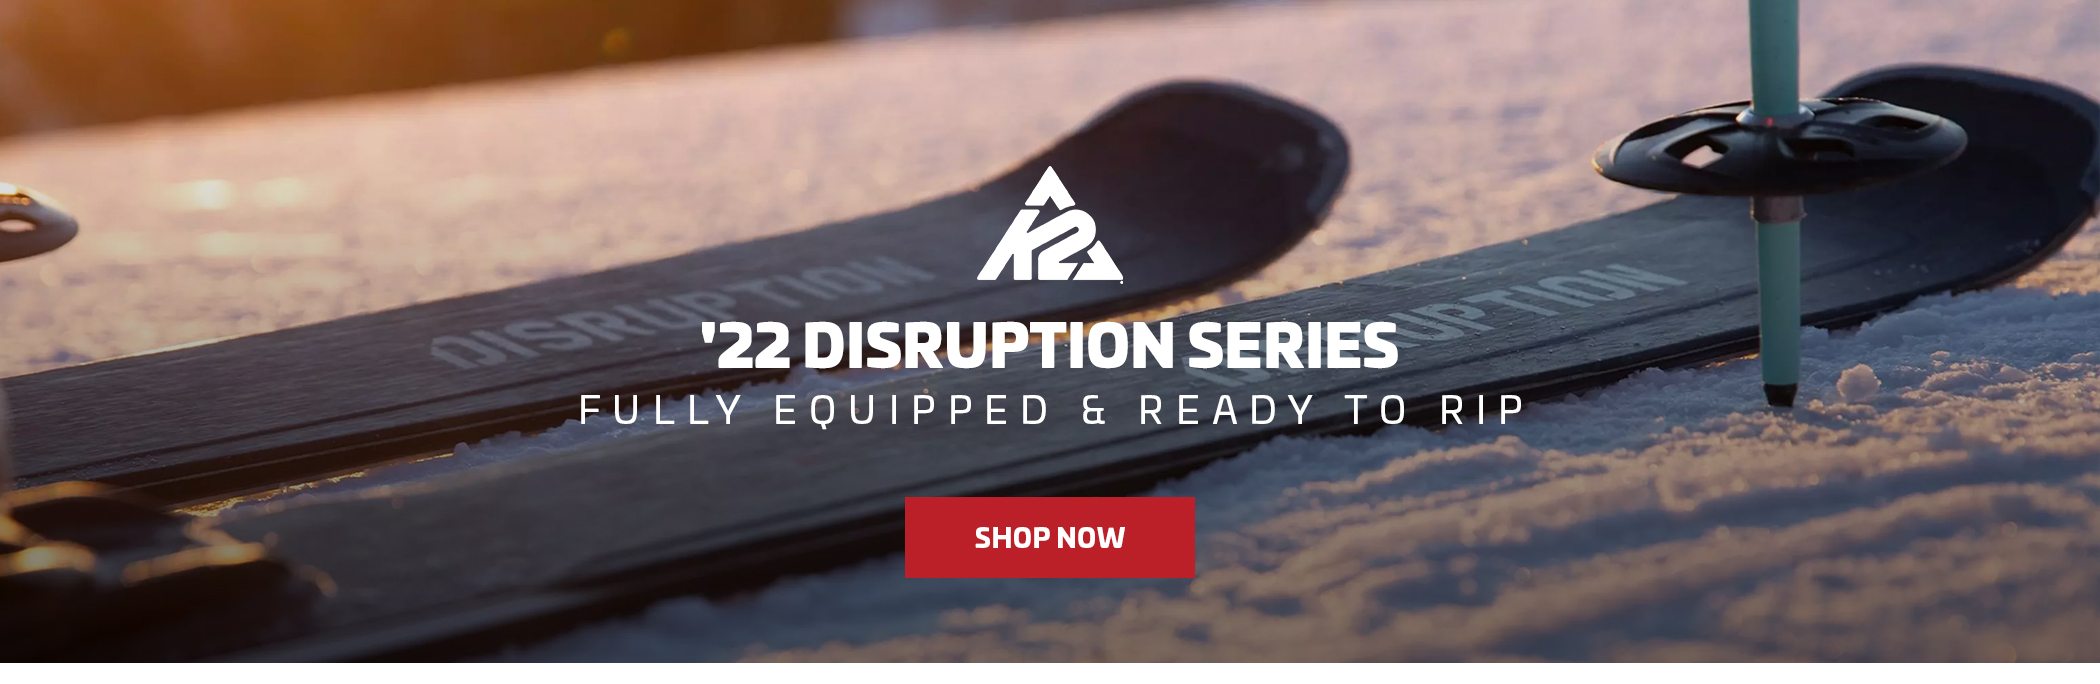 '22 K2 DISRUPTION SERIES - SHOP NOW